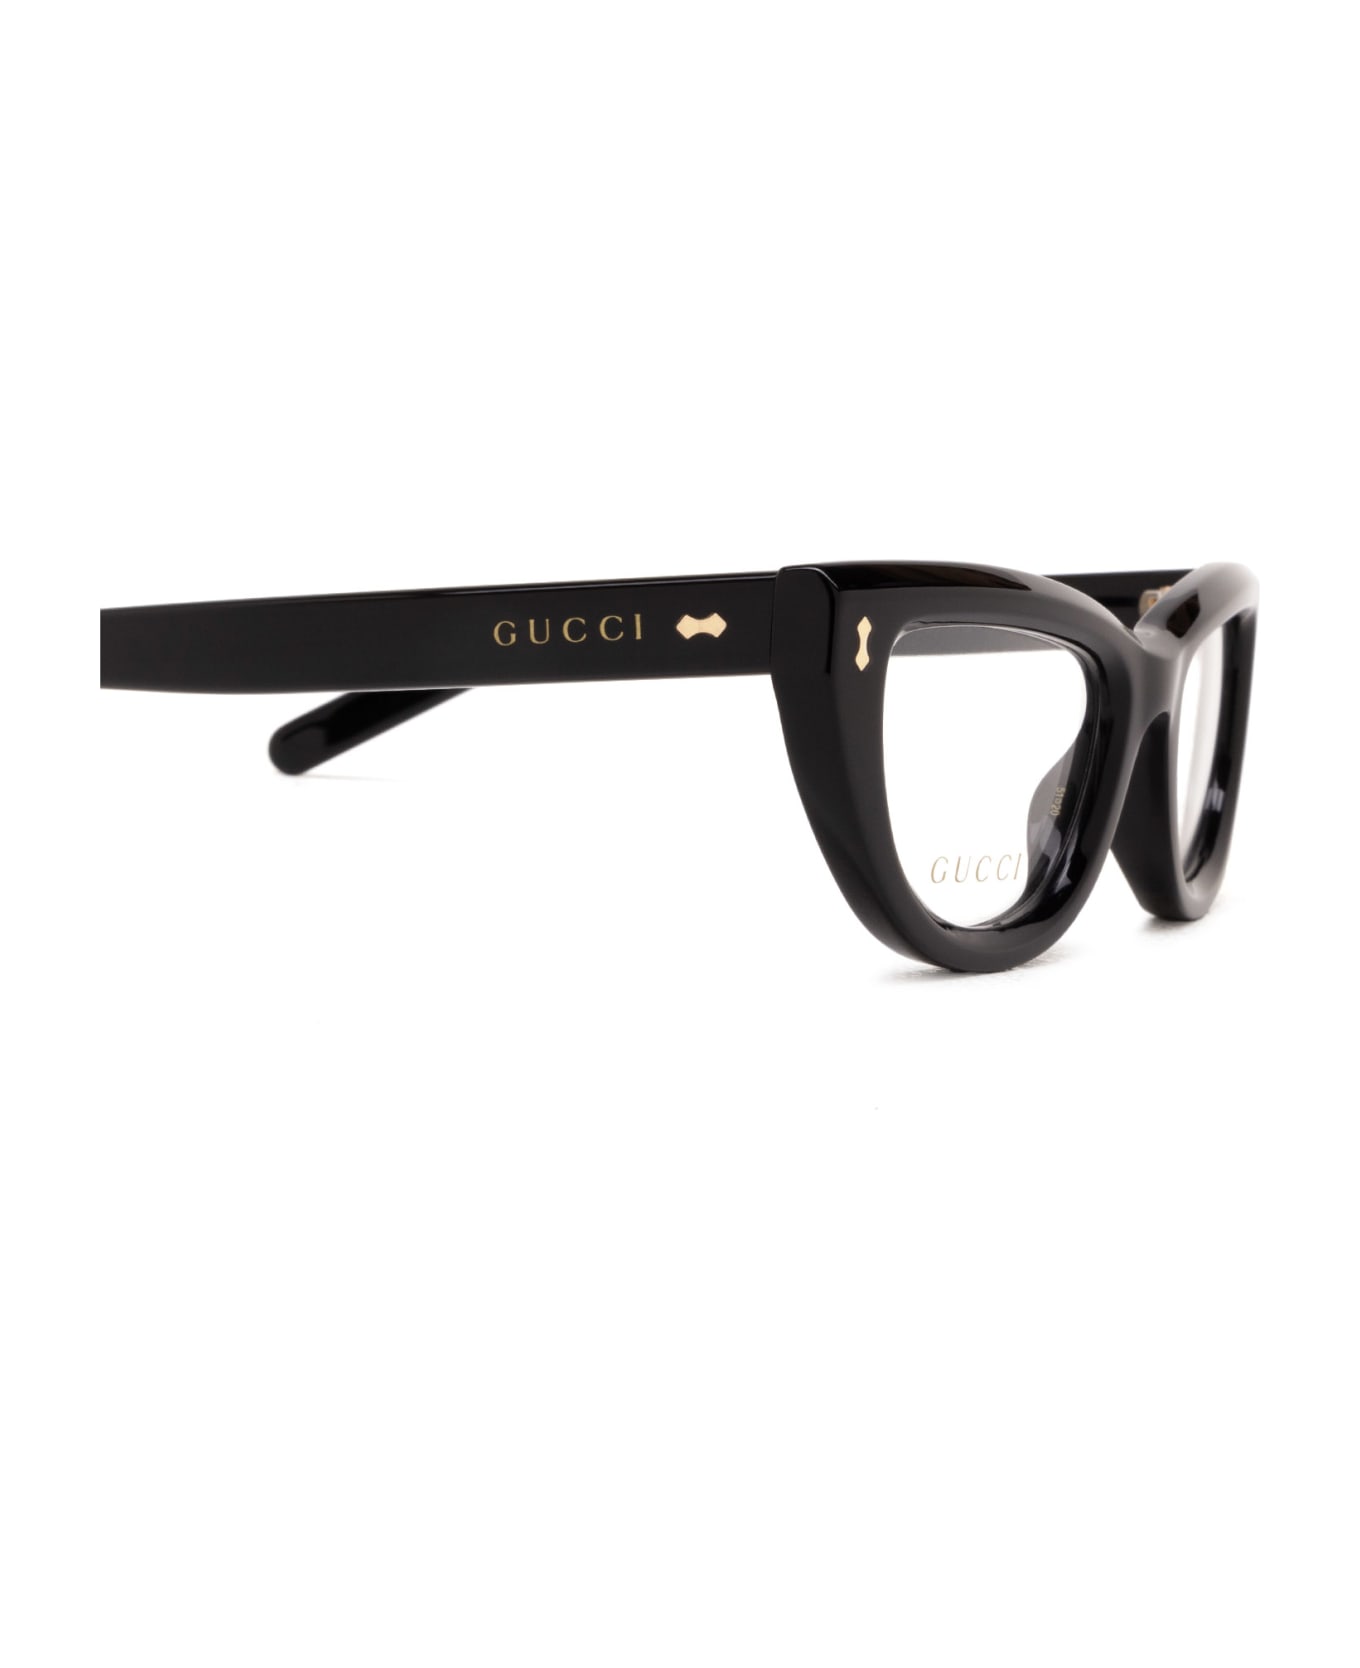 Gucci Eyewear Gg1521o Black Glasses - Black アイウェア